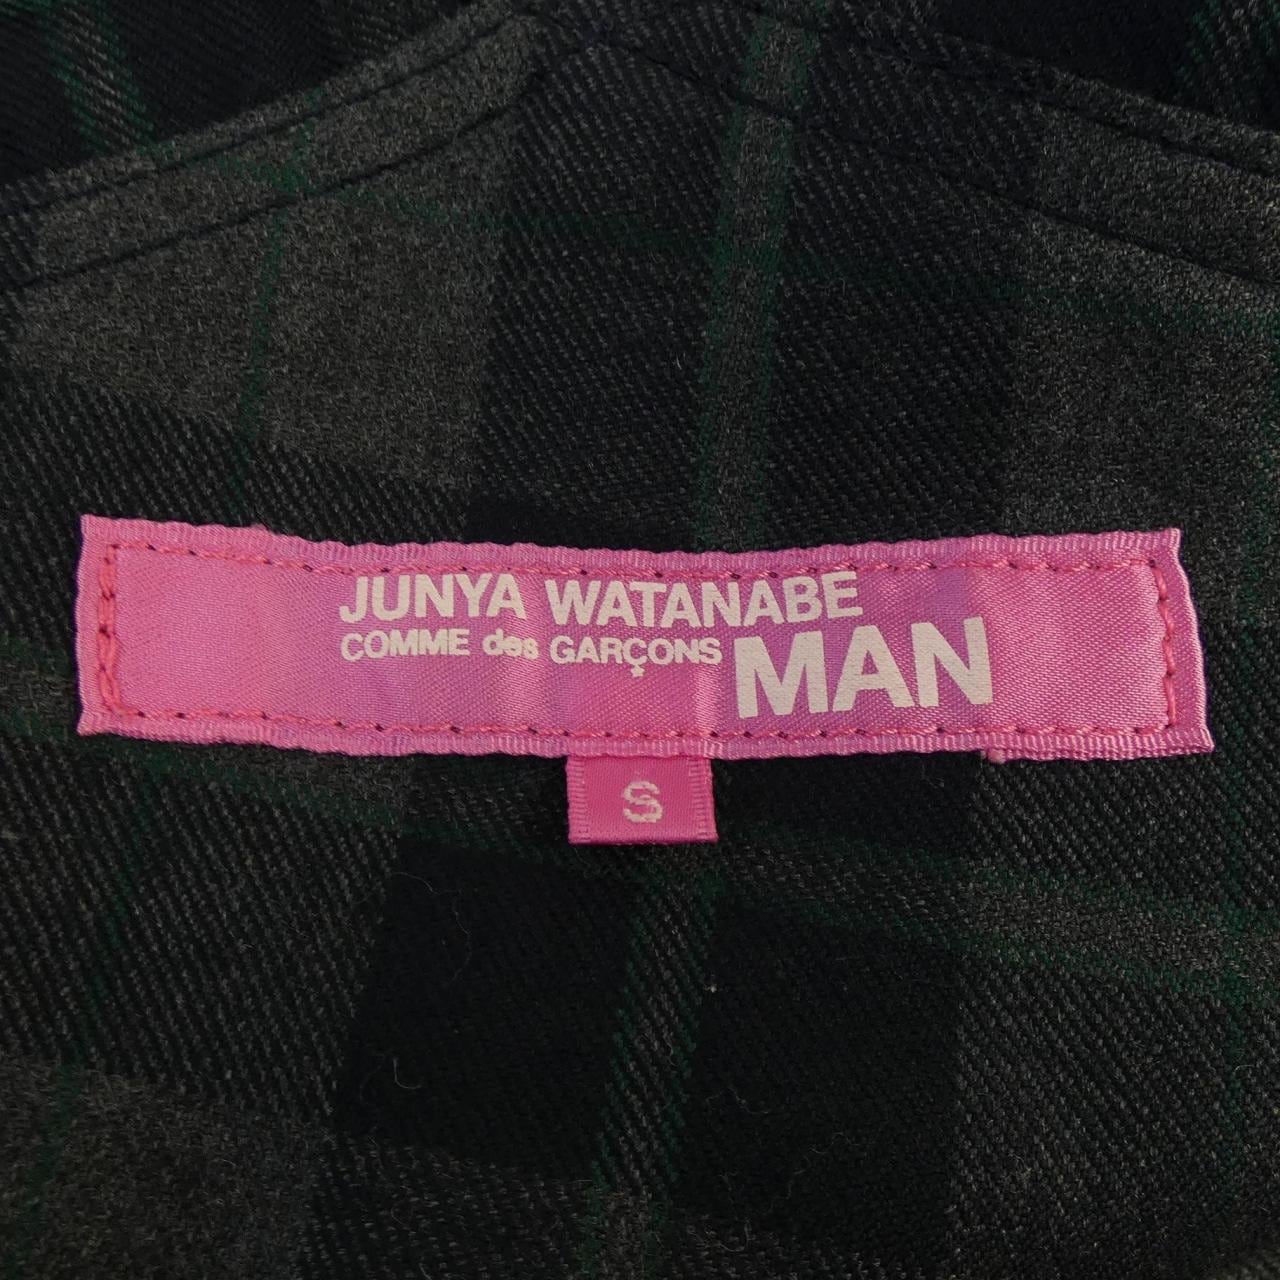 JUNYA WATANABE MAN连体裤